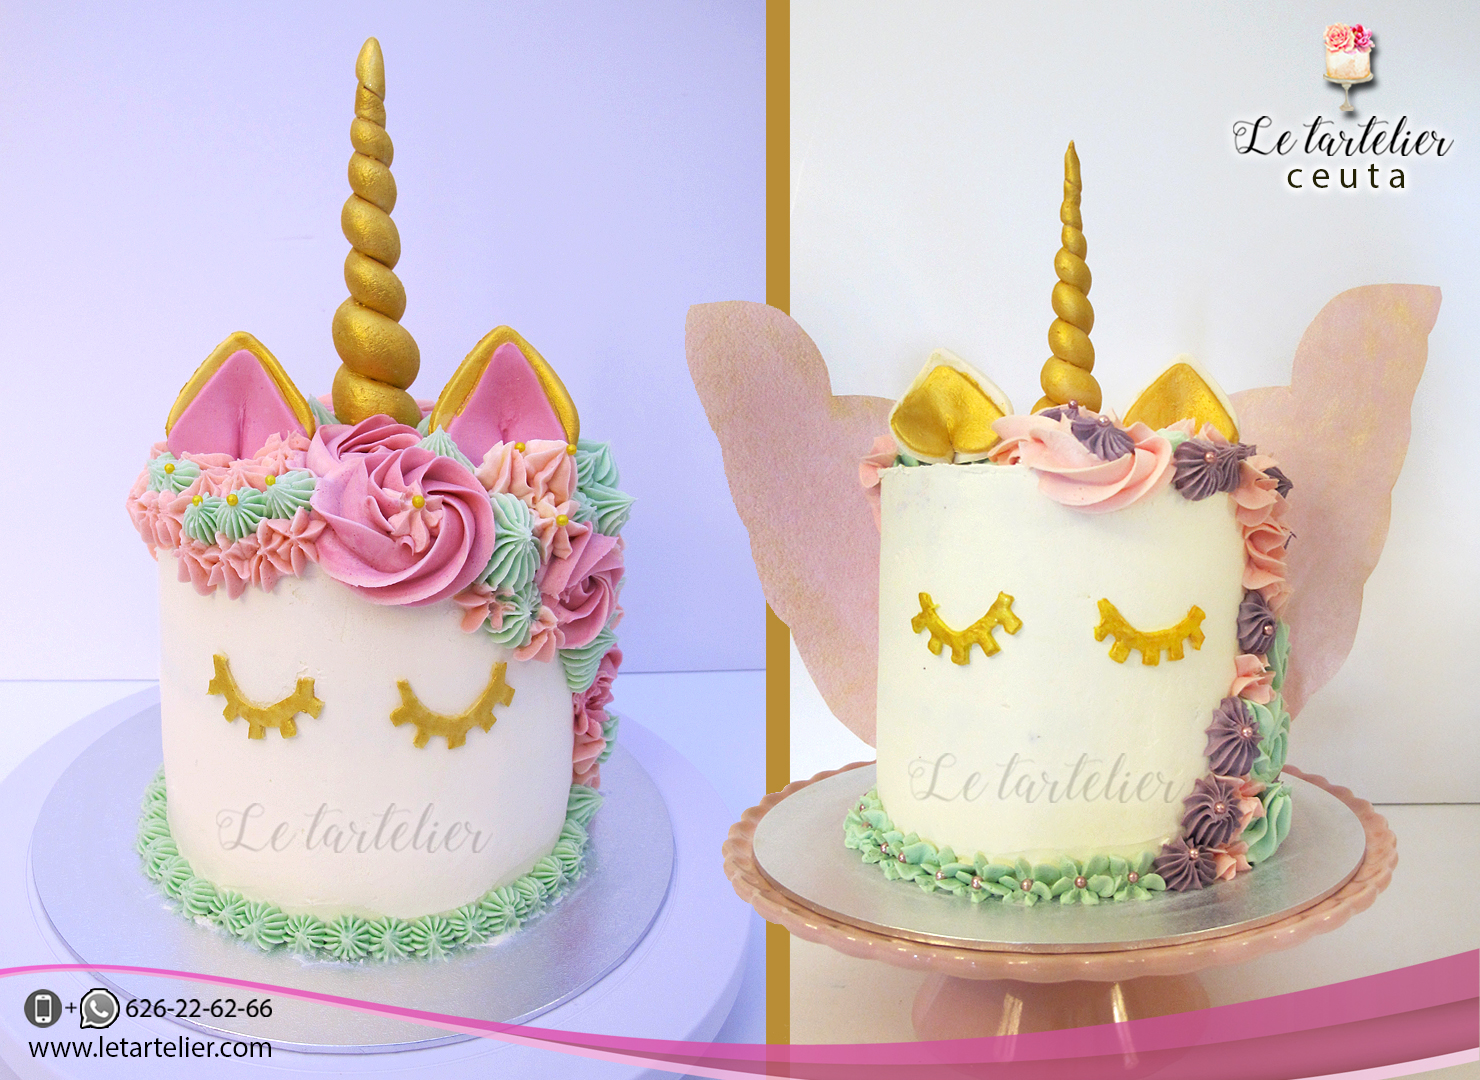 Tarta unicornio con alas. Unicorn cake. Le tartelier Ceuta.